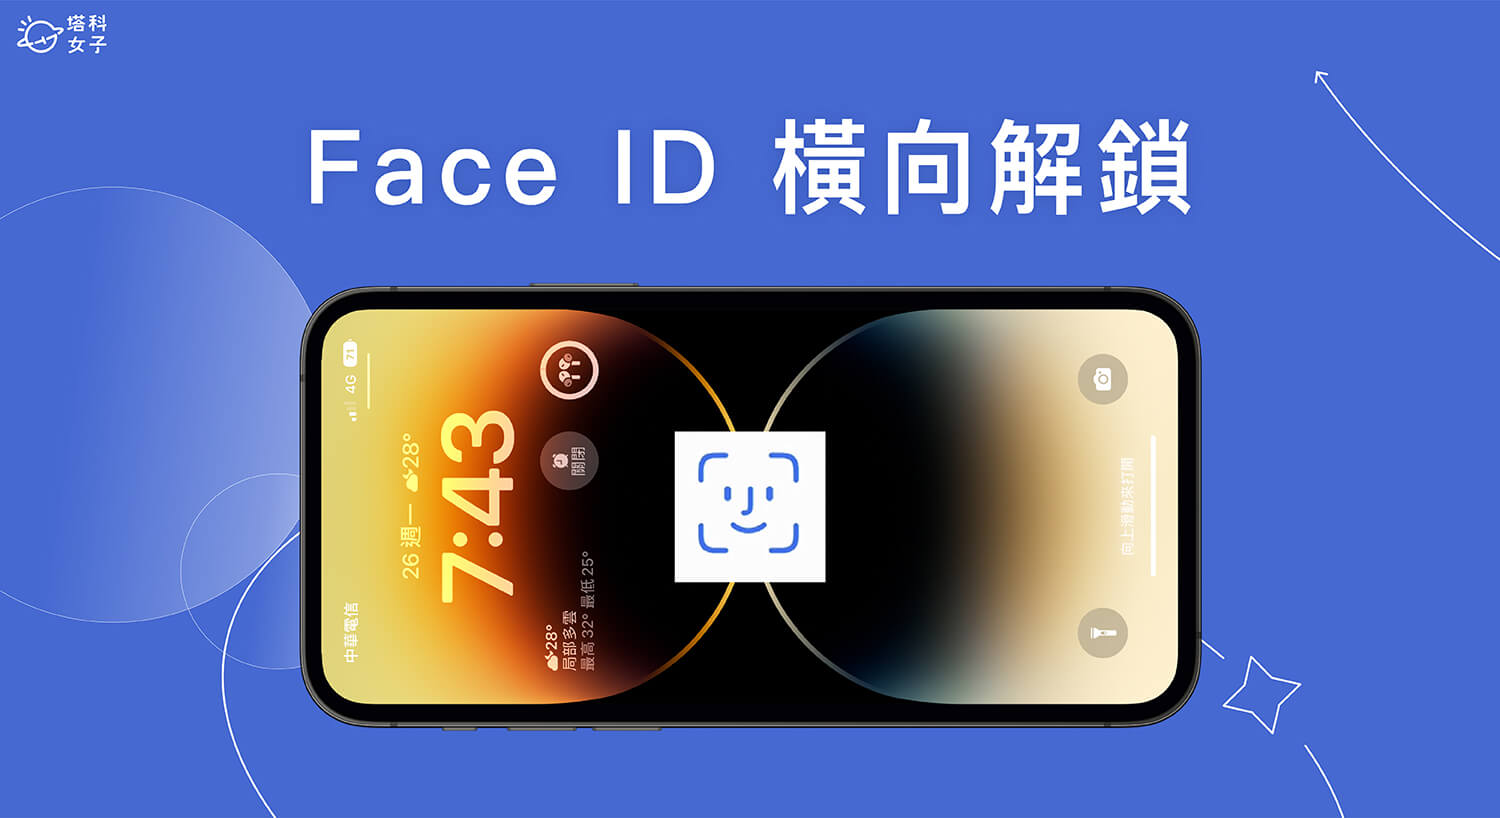 iPhone Face ID 橫向解鎖功能，橫放也能臉部辨識 (附支援機型列表)